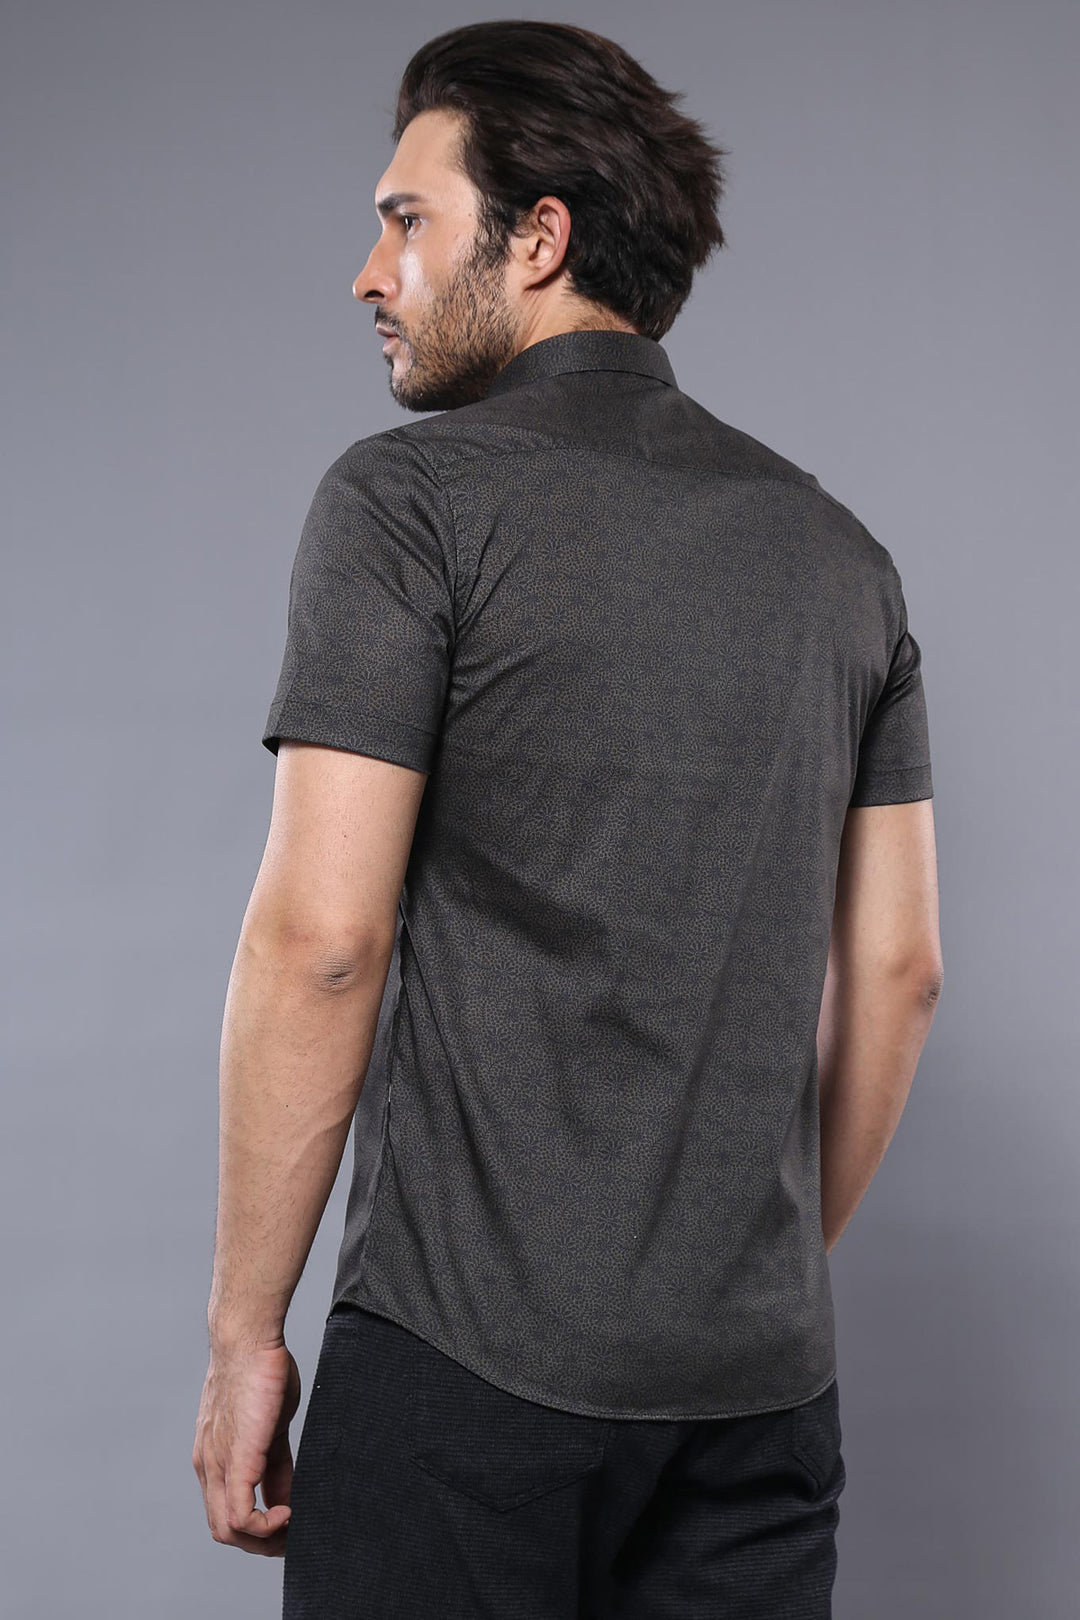 Patterned Short Sleeves Khaki Men Shirt - Wessi